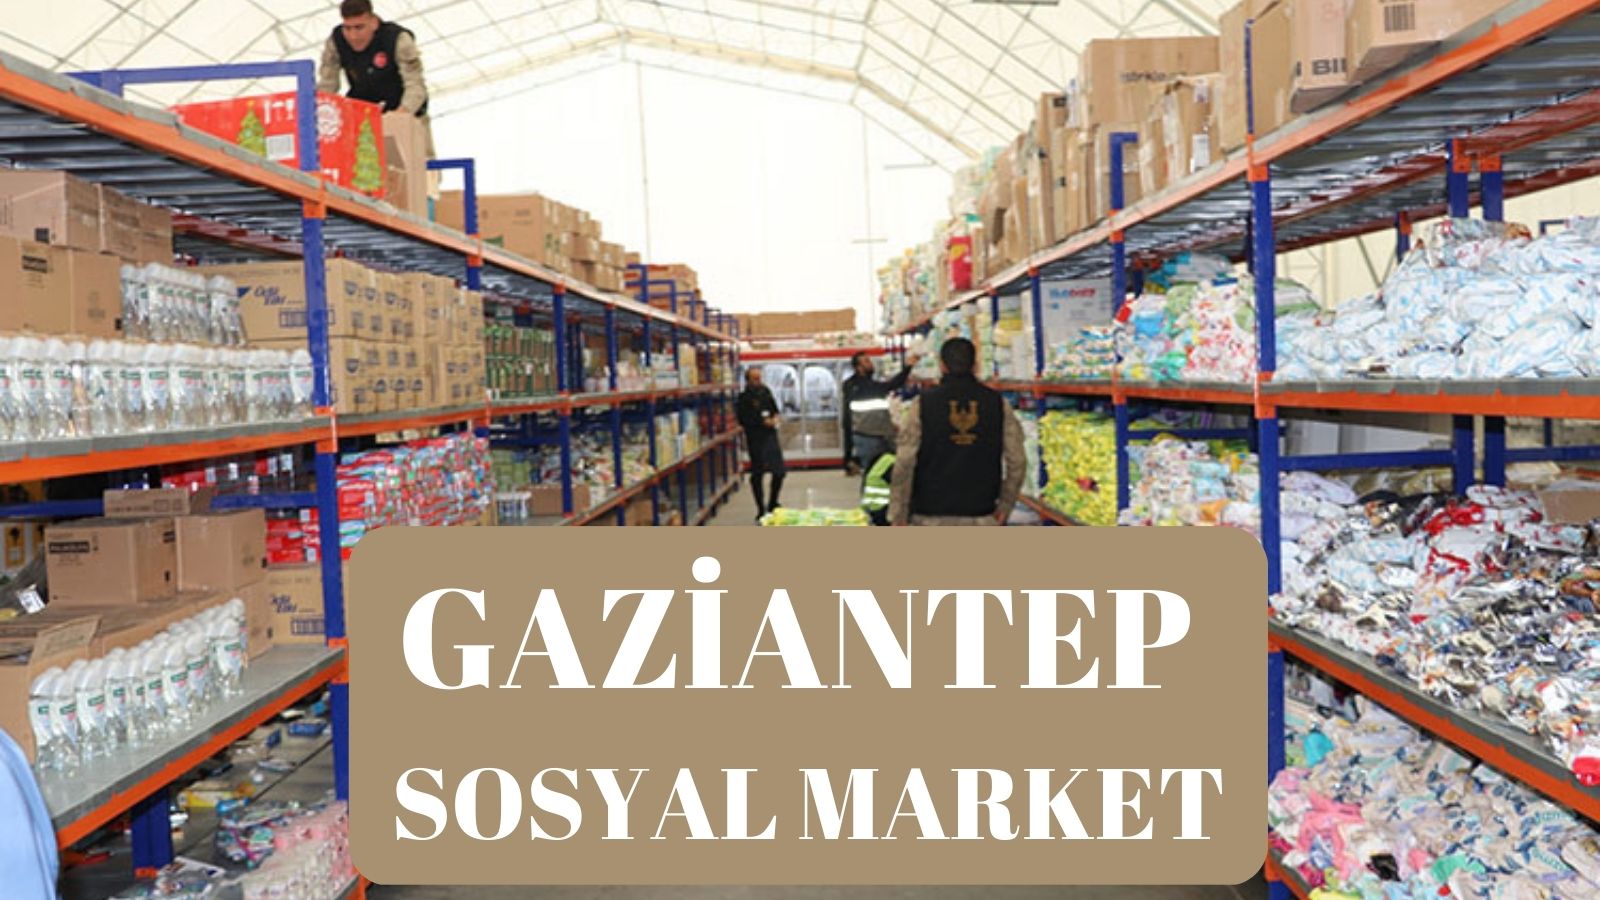 Gaziantep Sosyal Market